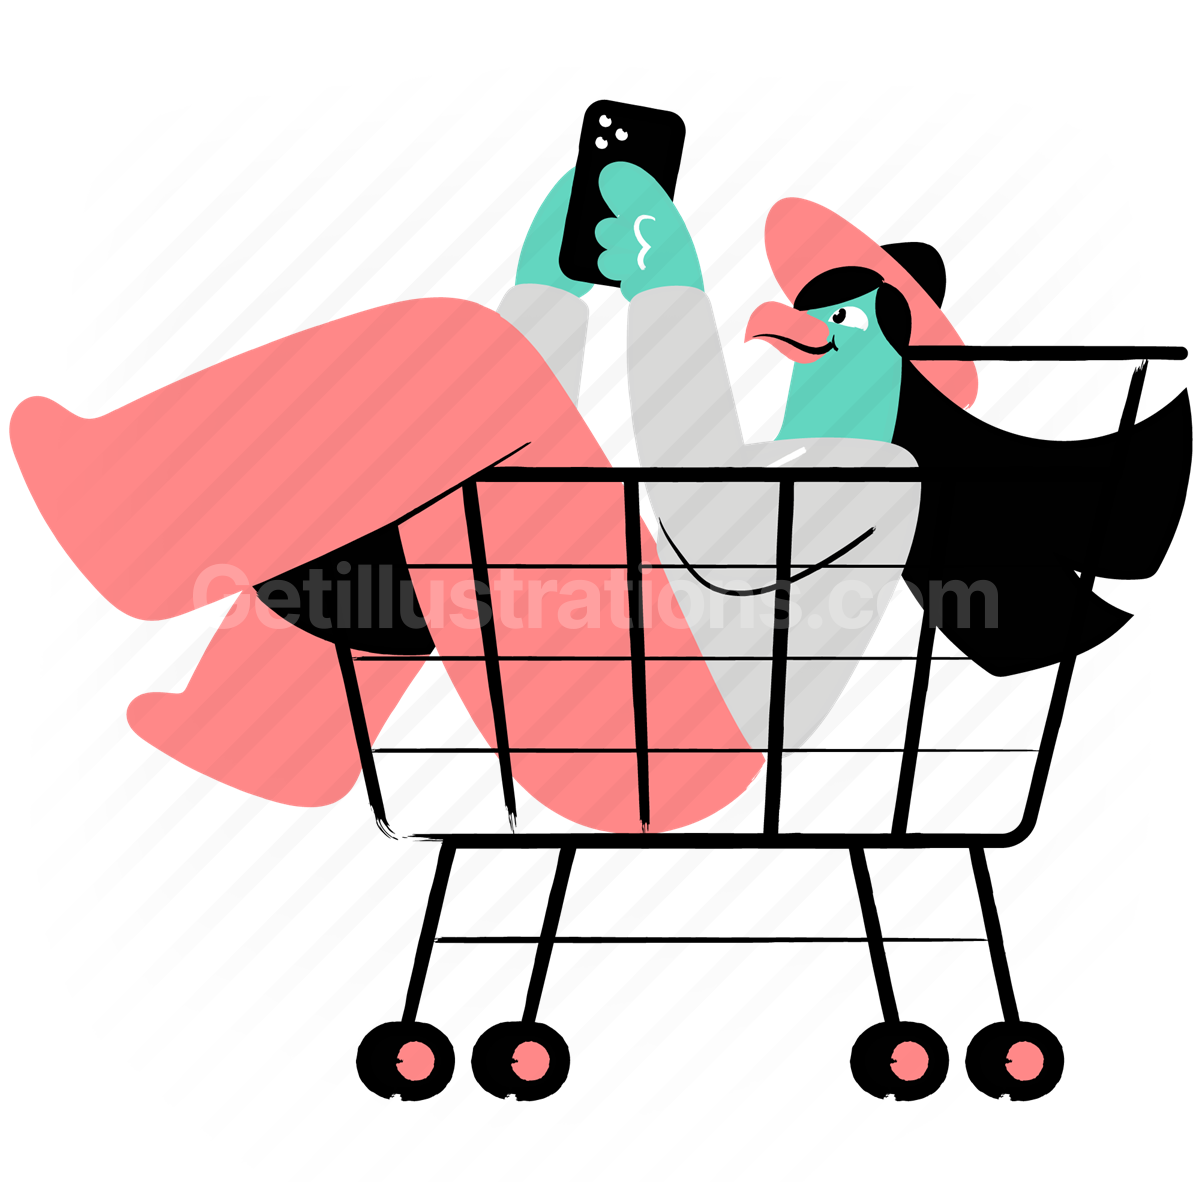 shop, store, online, smartphone, phone, cart, animal